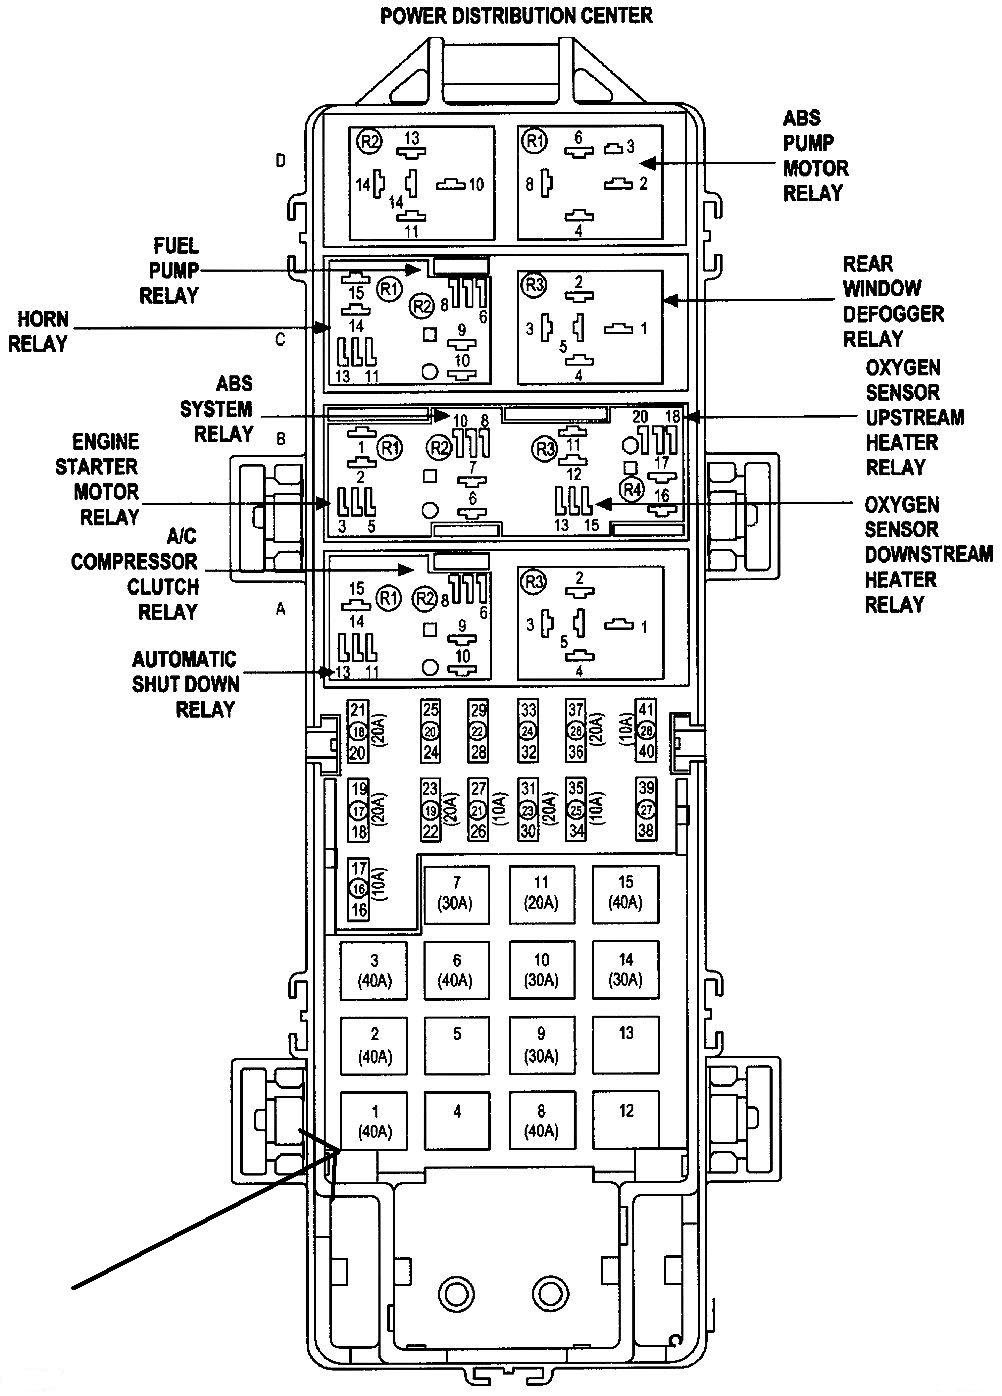 [DIAGRAM] Jeep Wrangler Wiring Diagram 51 1 FULL Version HD Quality 51